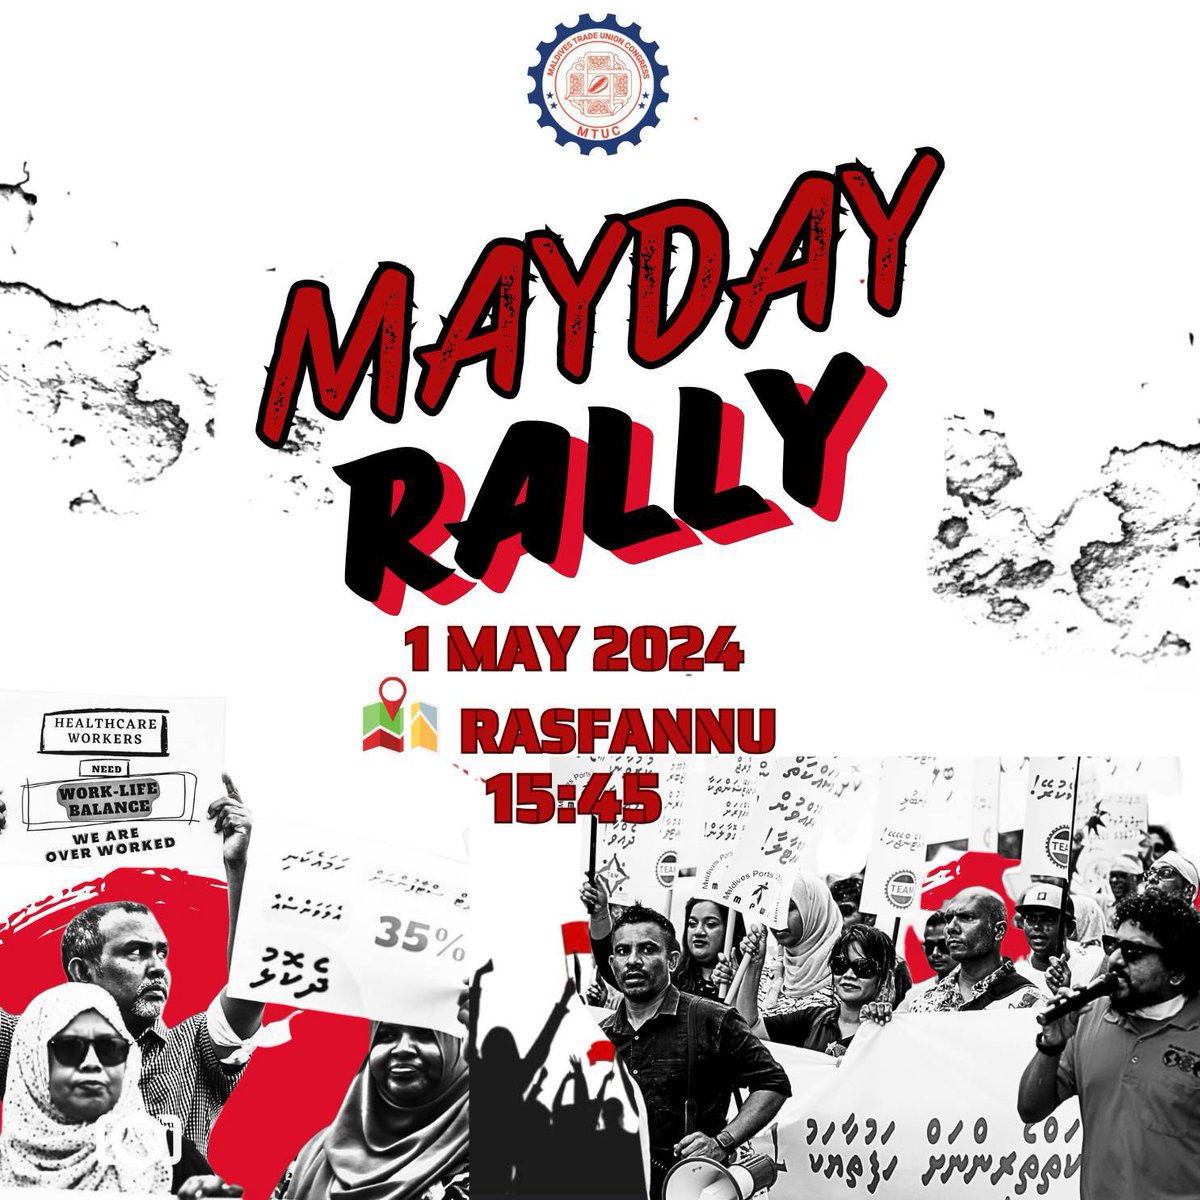 May Day Rally alert @TEAMmaldives @port_union @TAMaldives @MaldivesHPU @FishermensUnion @mjamaldives